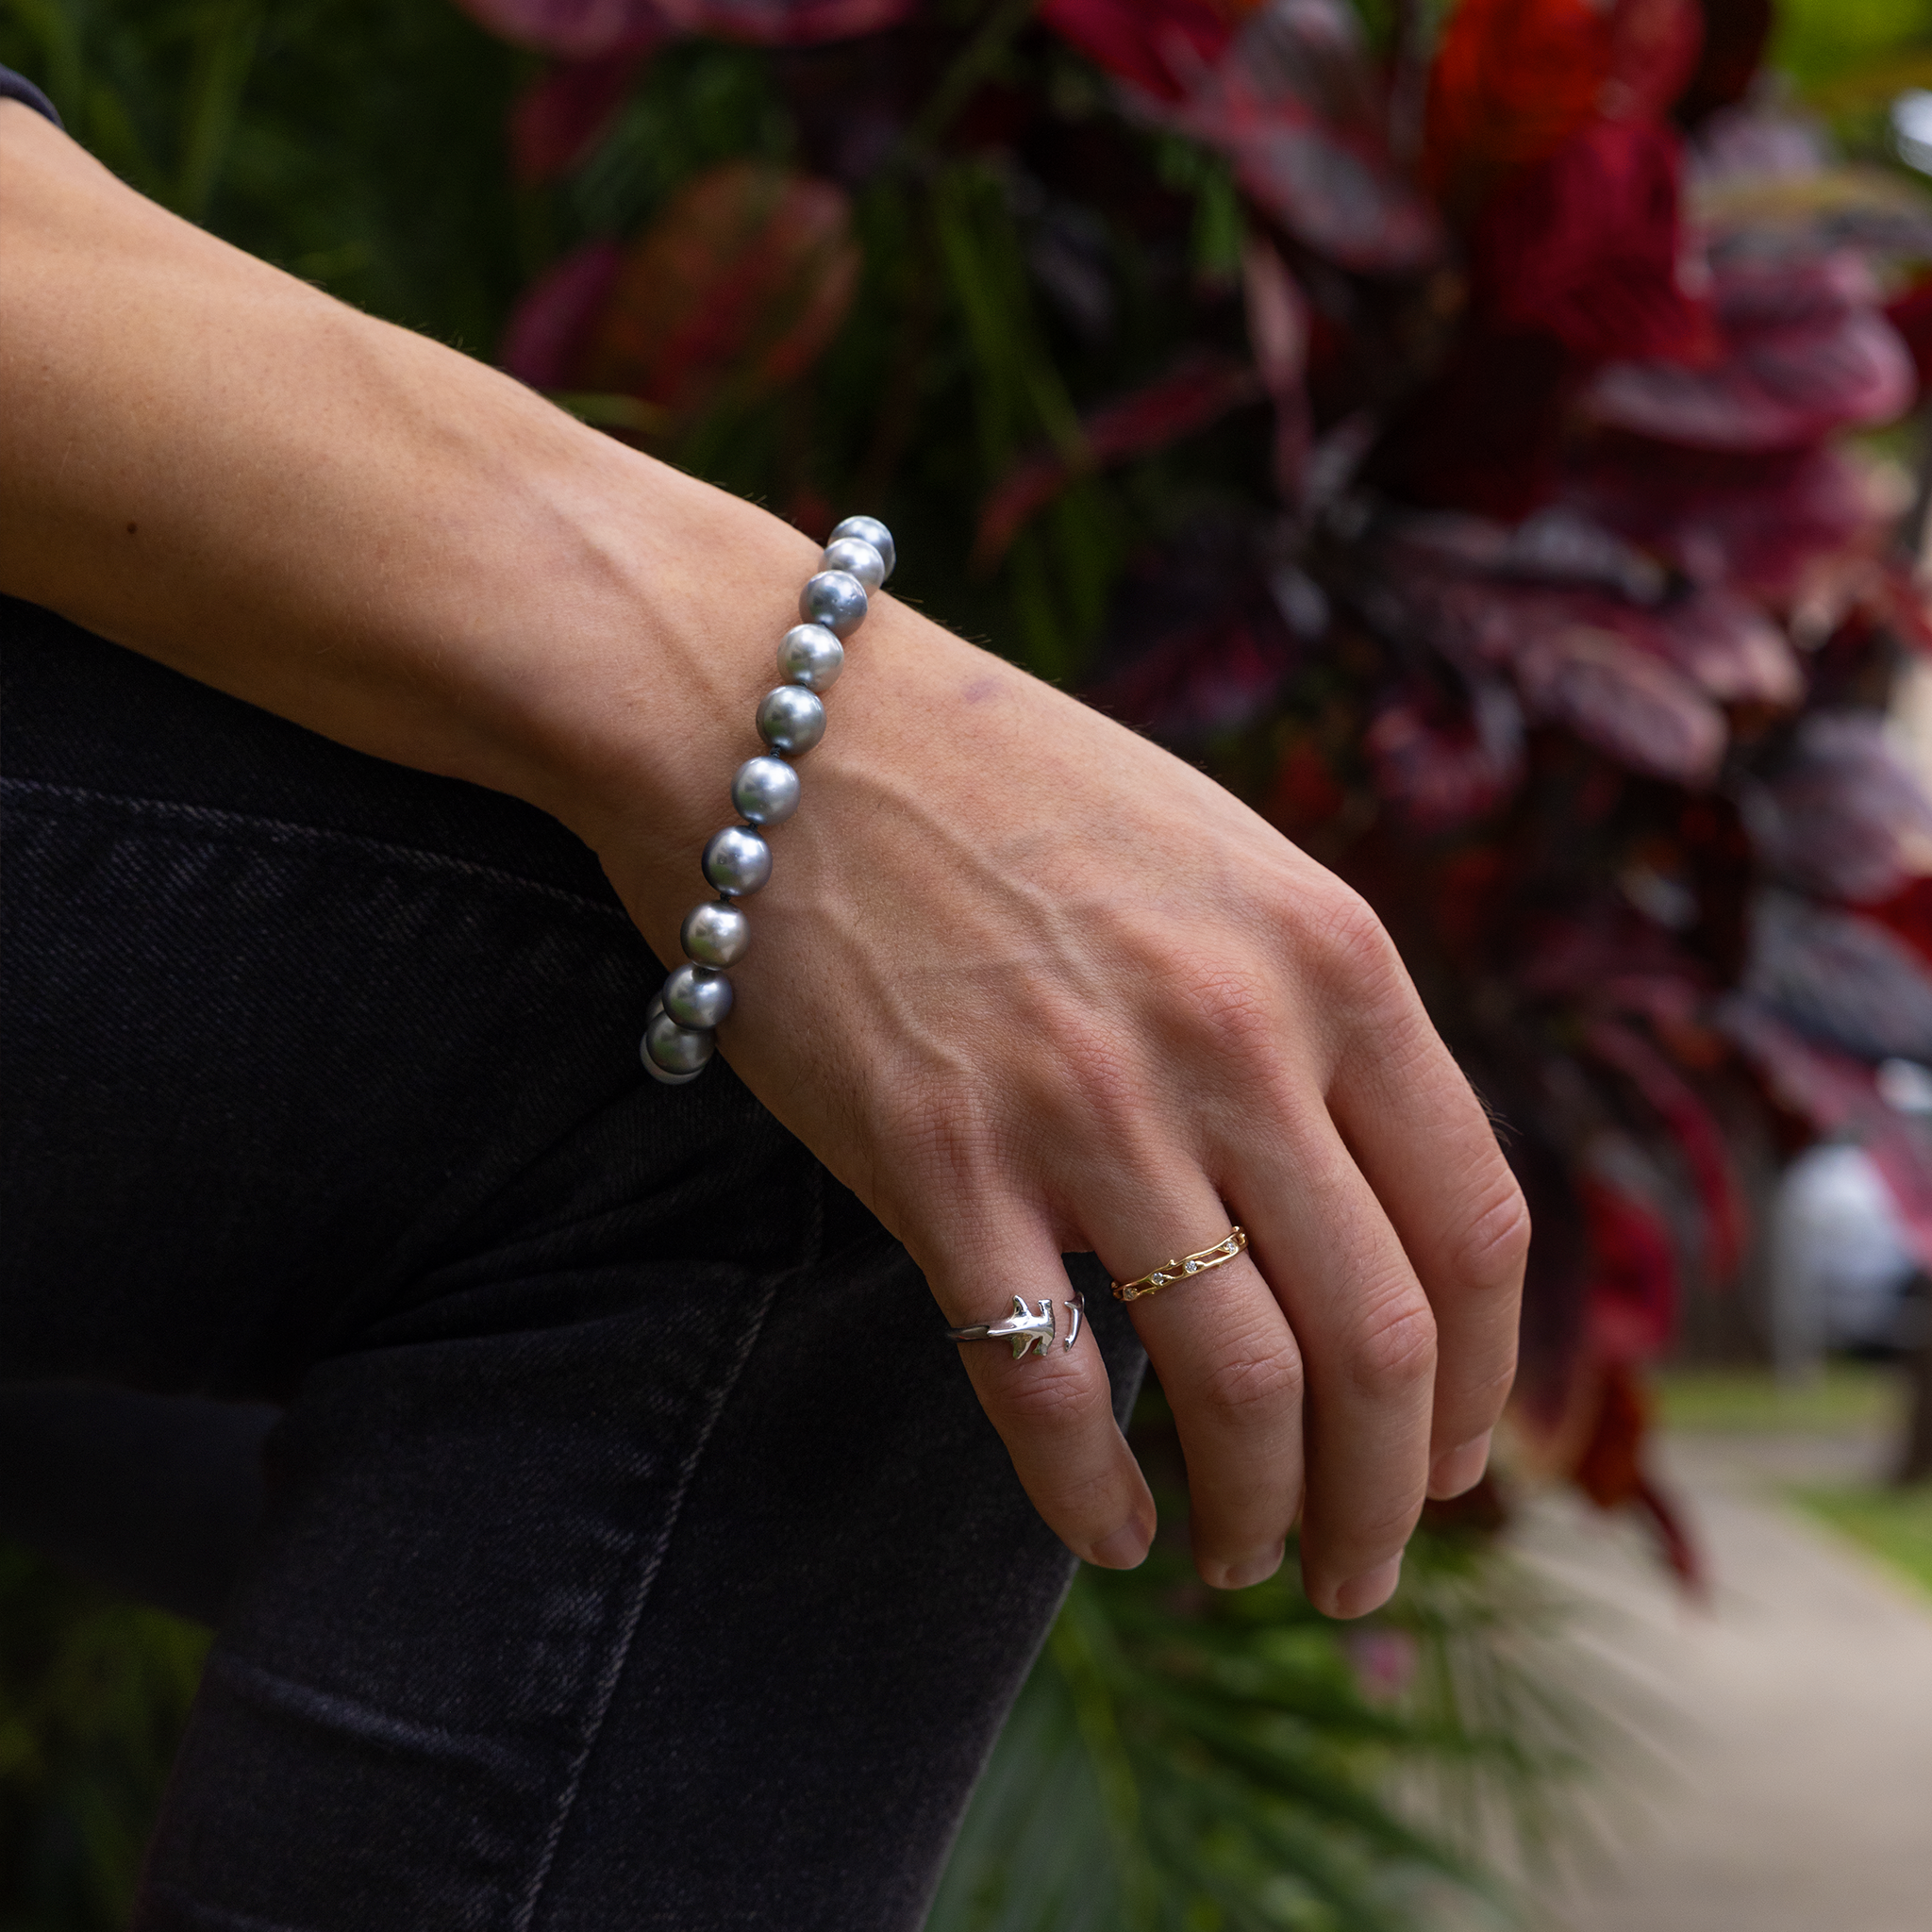 Adjustable Tahitian Black Pearls Bracelet in Gold - 9-10mm - Size 7.5-9"